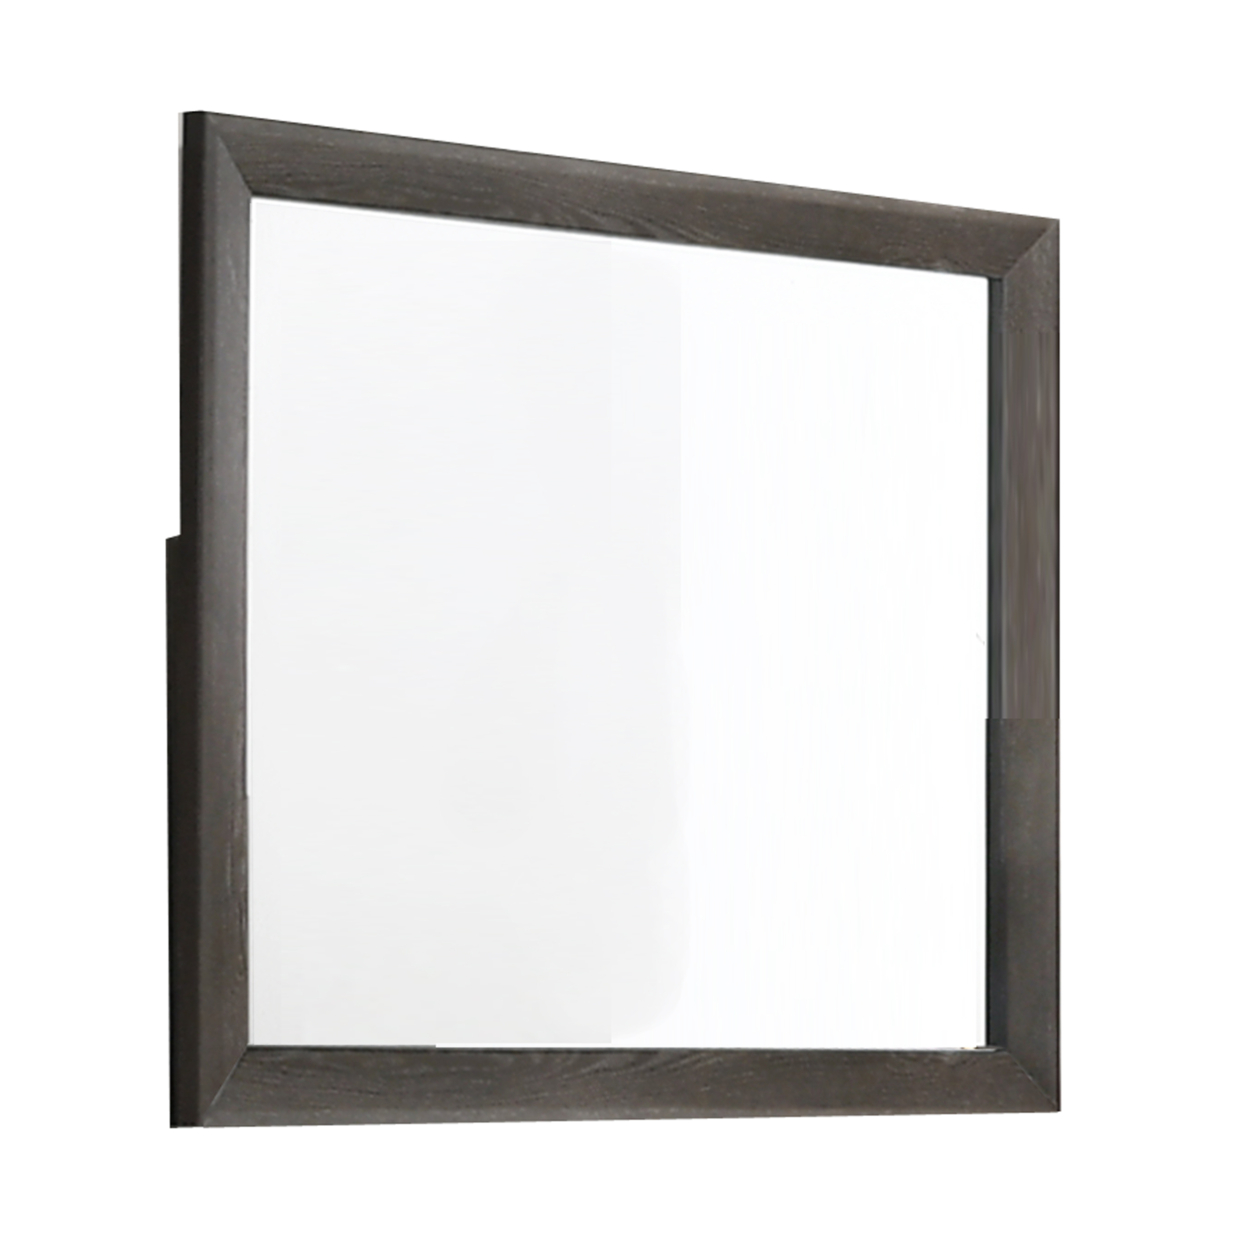 Transitional Style Rectangular Wooden Frame Dresser Mirror, Brown And Silver- Saltoro Sherpi